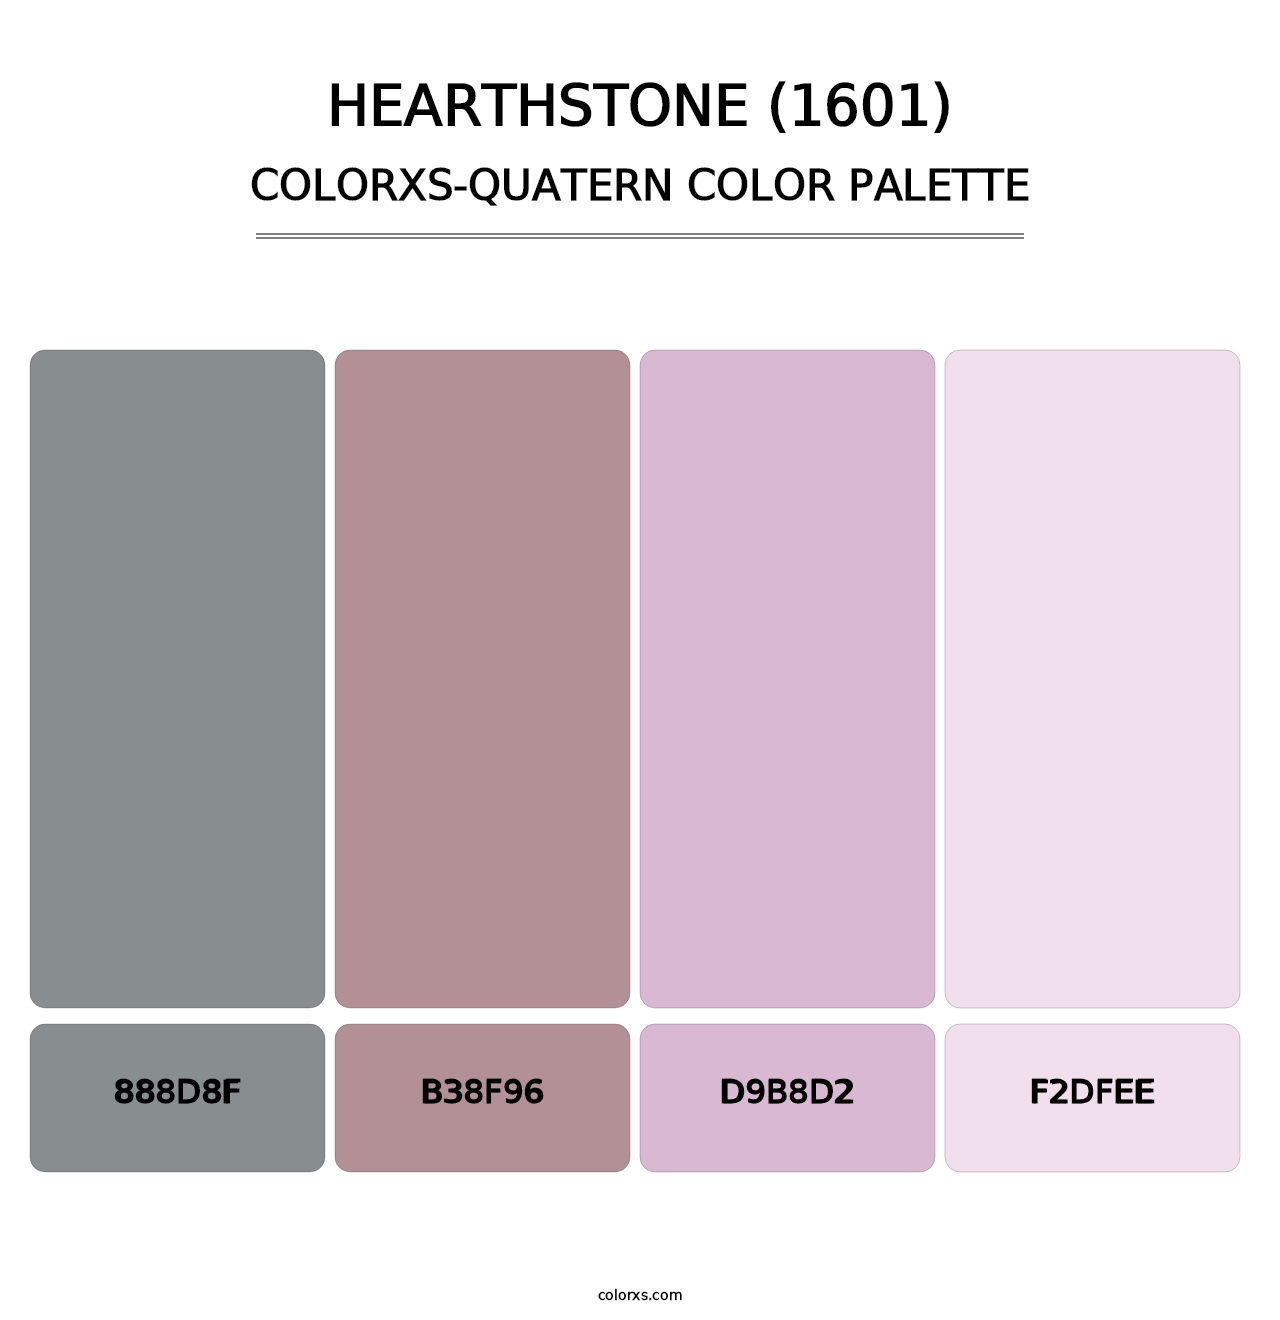 Hearthstone (1601) - Colorxs Quatern Palette